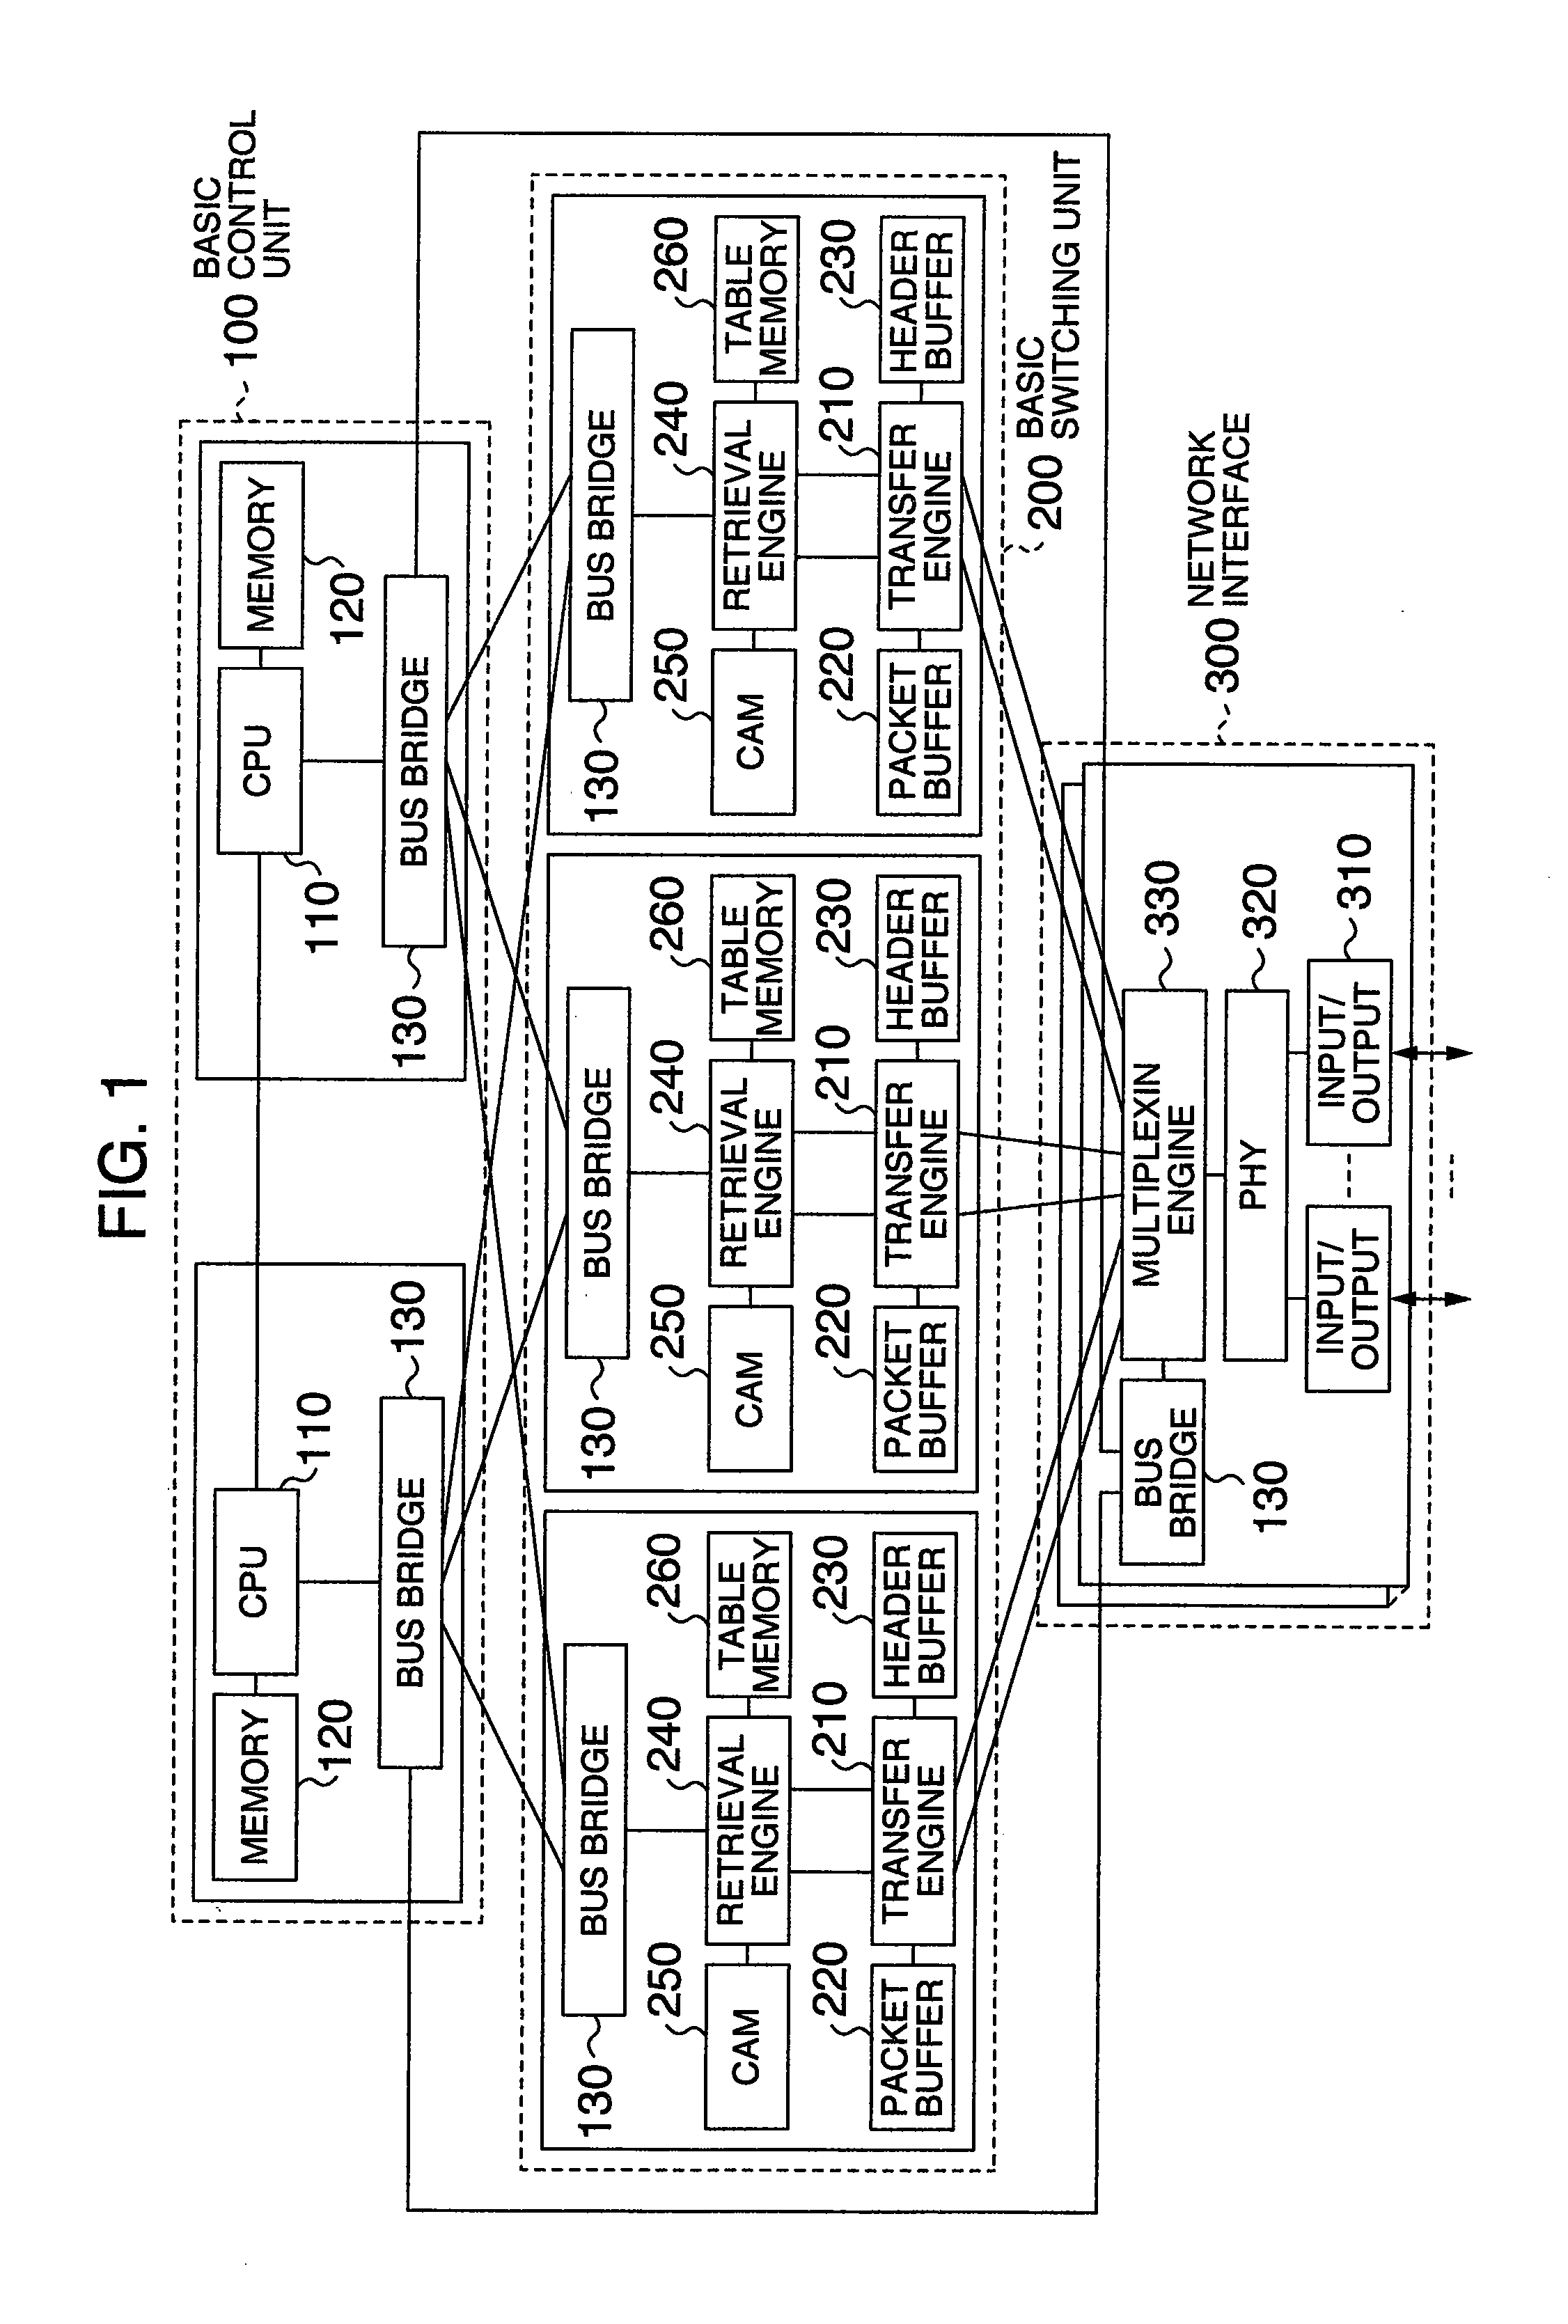 Data transfer device of serializer/deserializer system